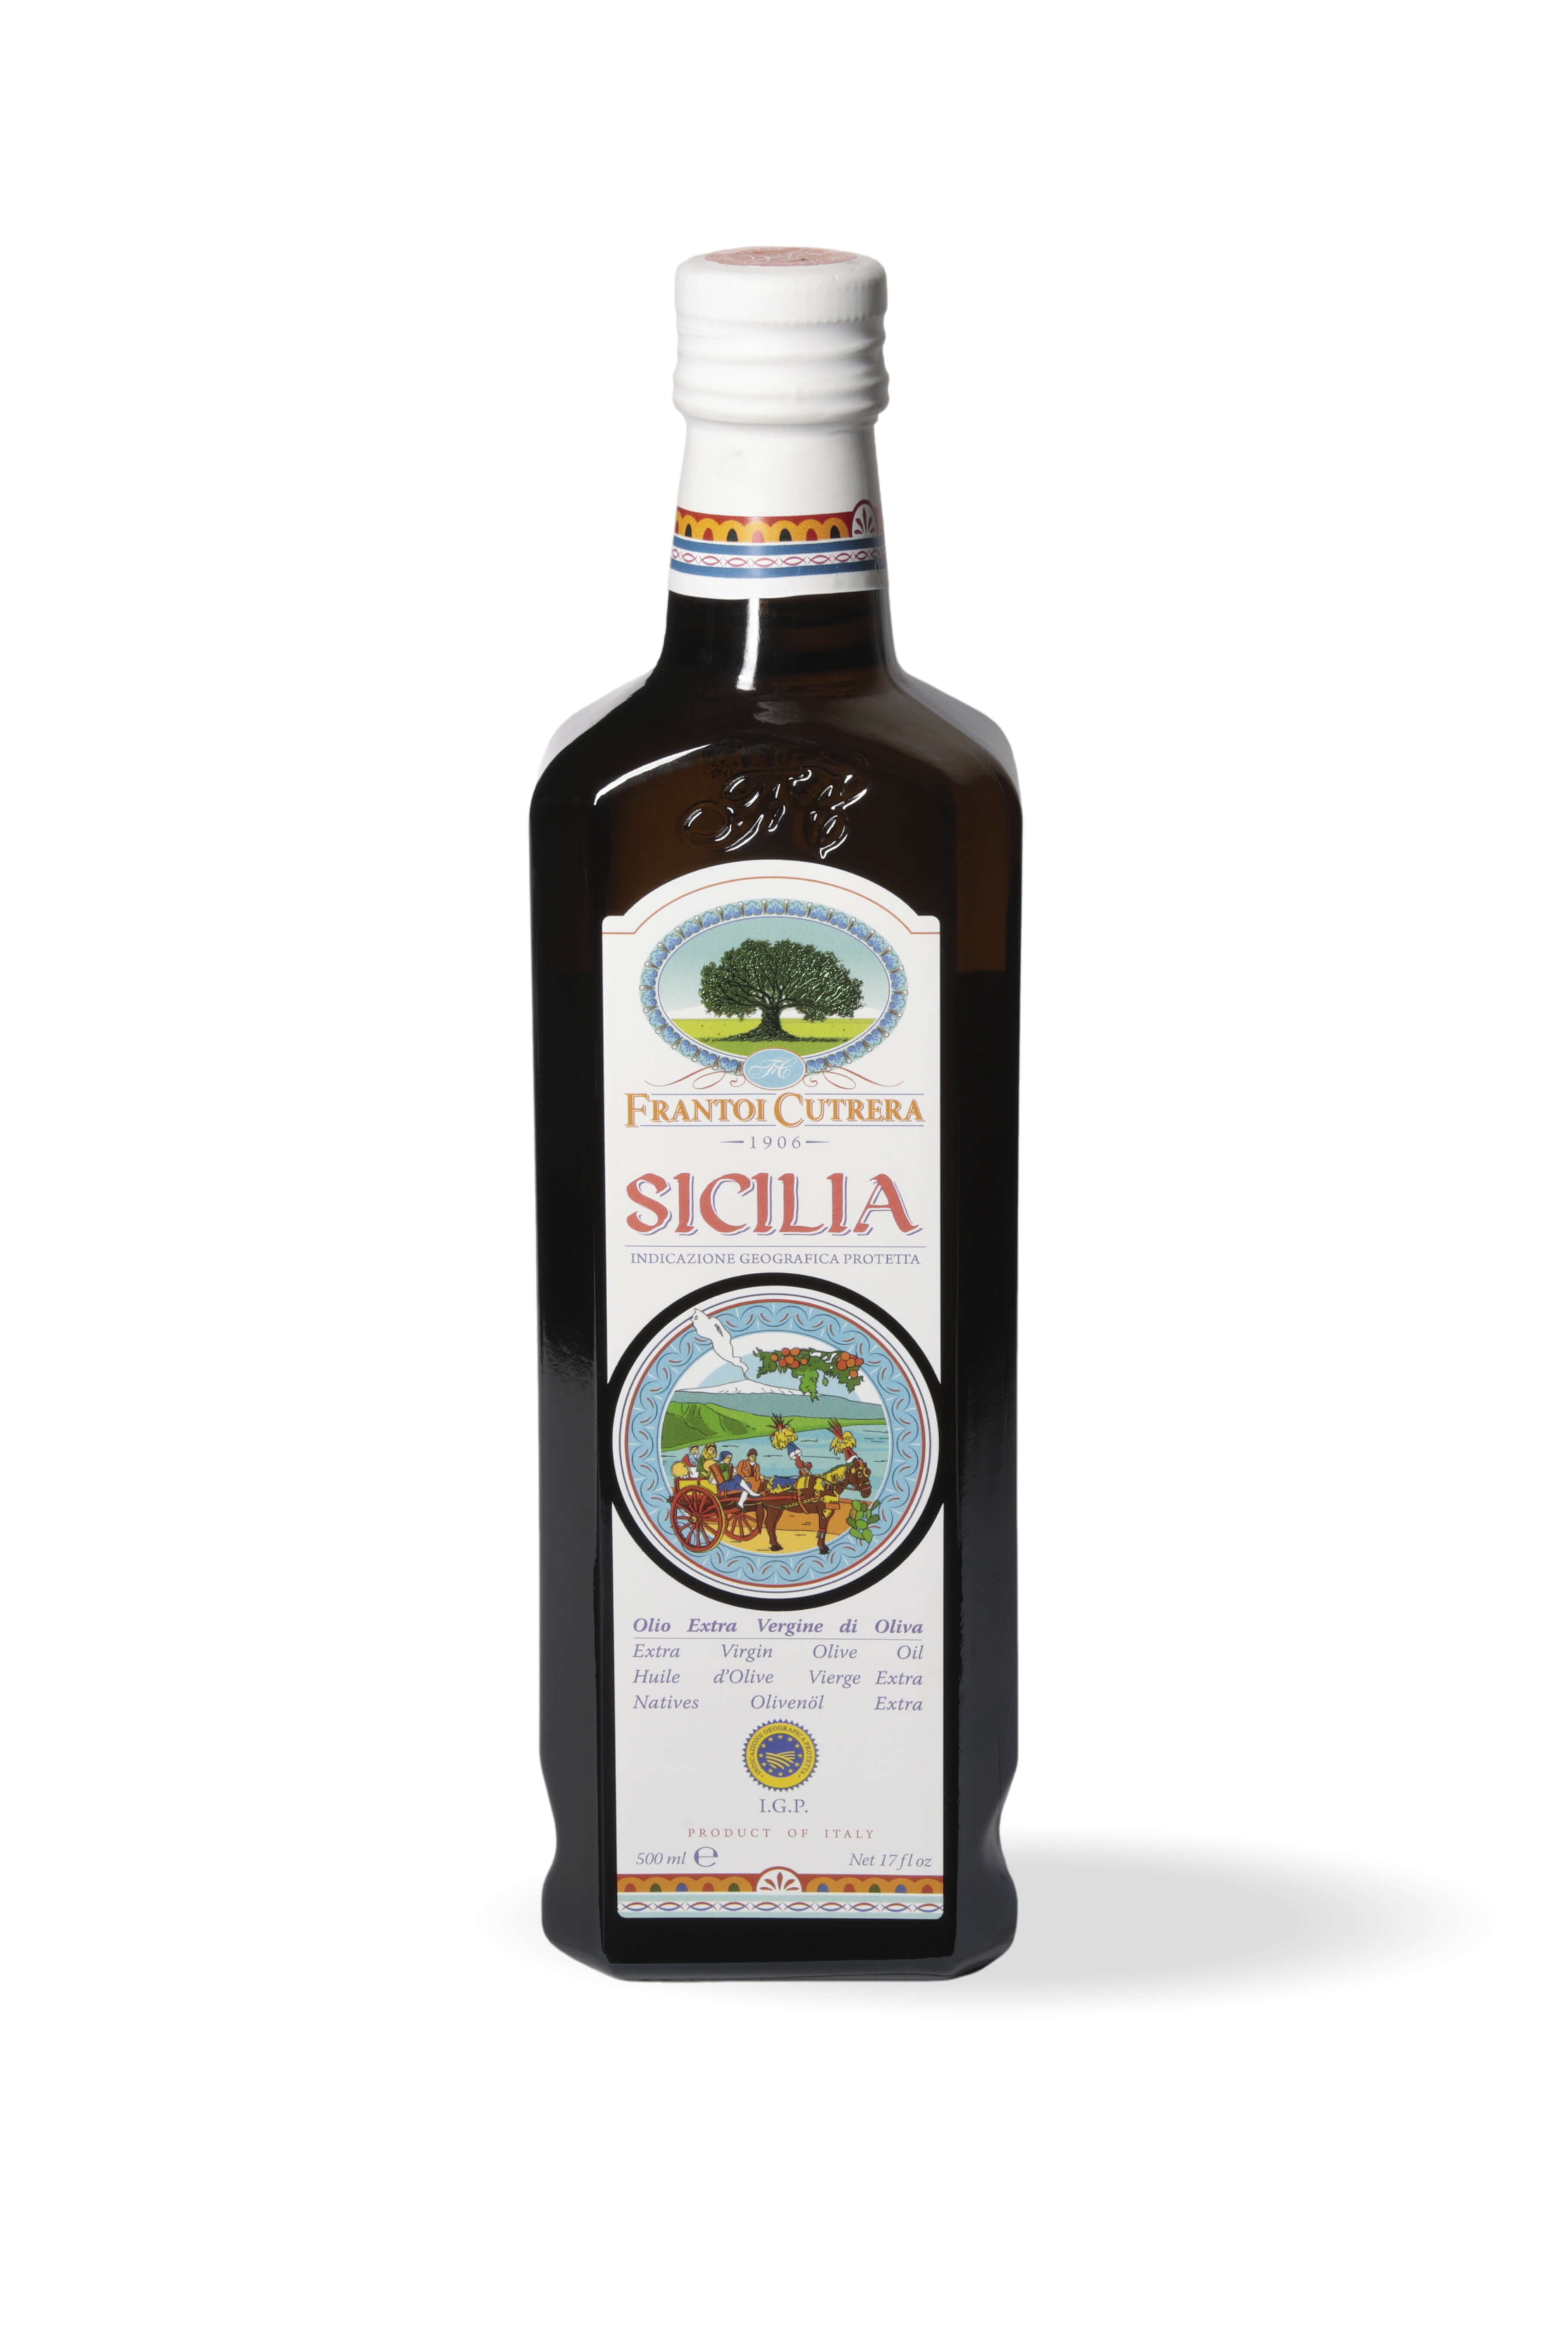 Cutrera PGI Sicily - Sicilian Extra Virgin Olive Oil - Single Bottle